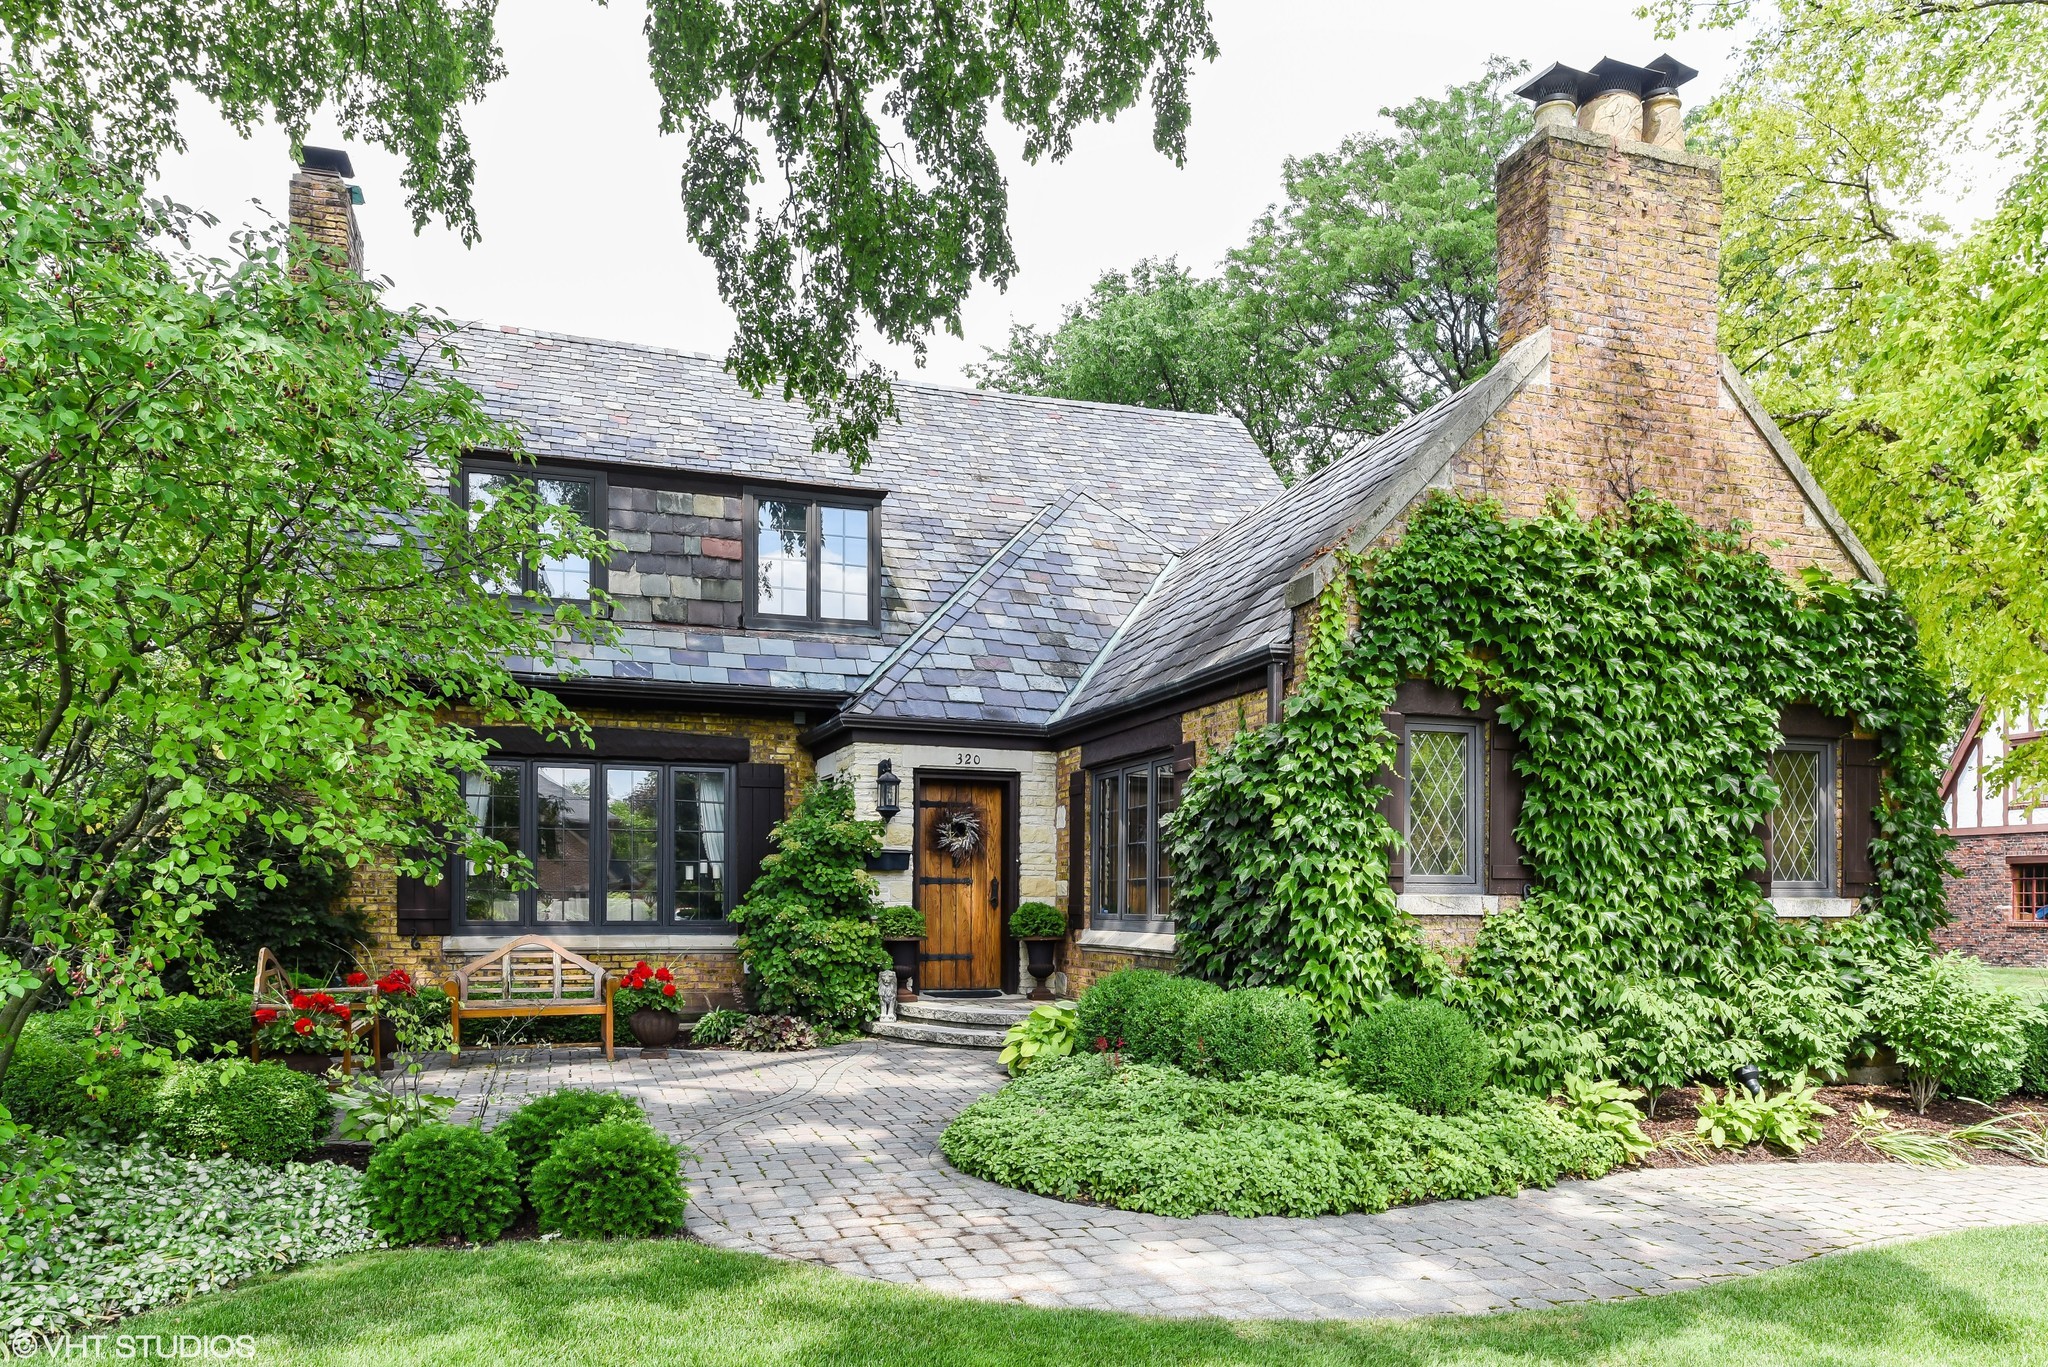 Elmhurst Tudor with vine-covered courtyard: $1.5M - Chicago Tribune